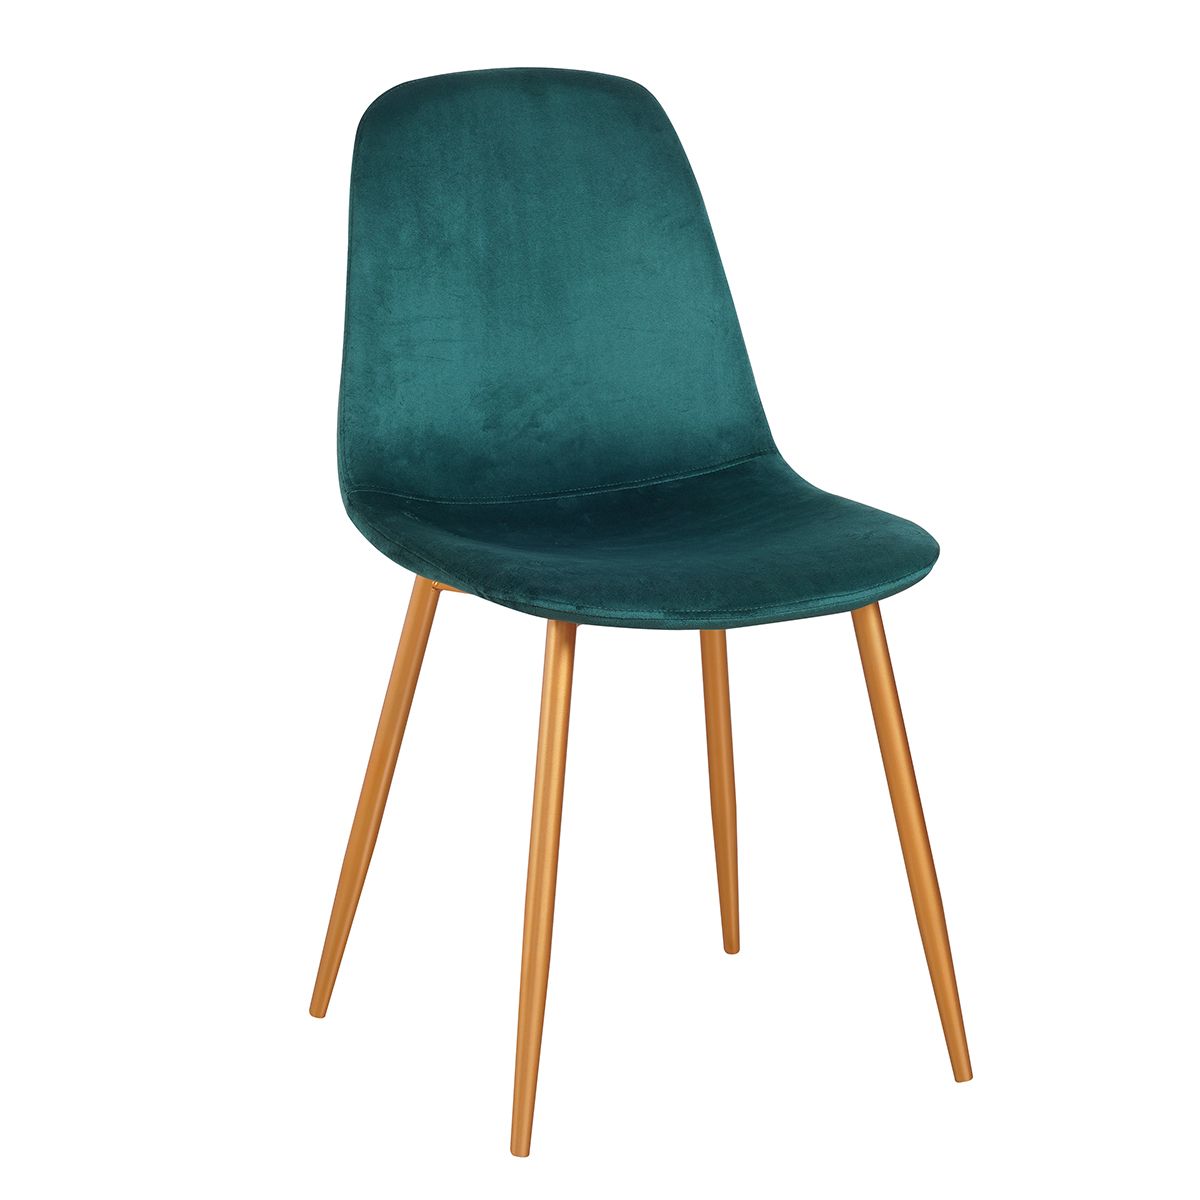 Chair AUDUBON Green / Gold Fabric / Wood 44x52x85cm